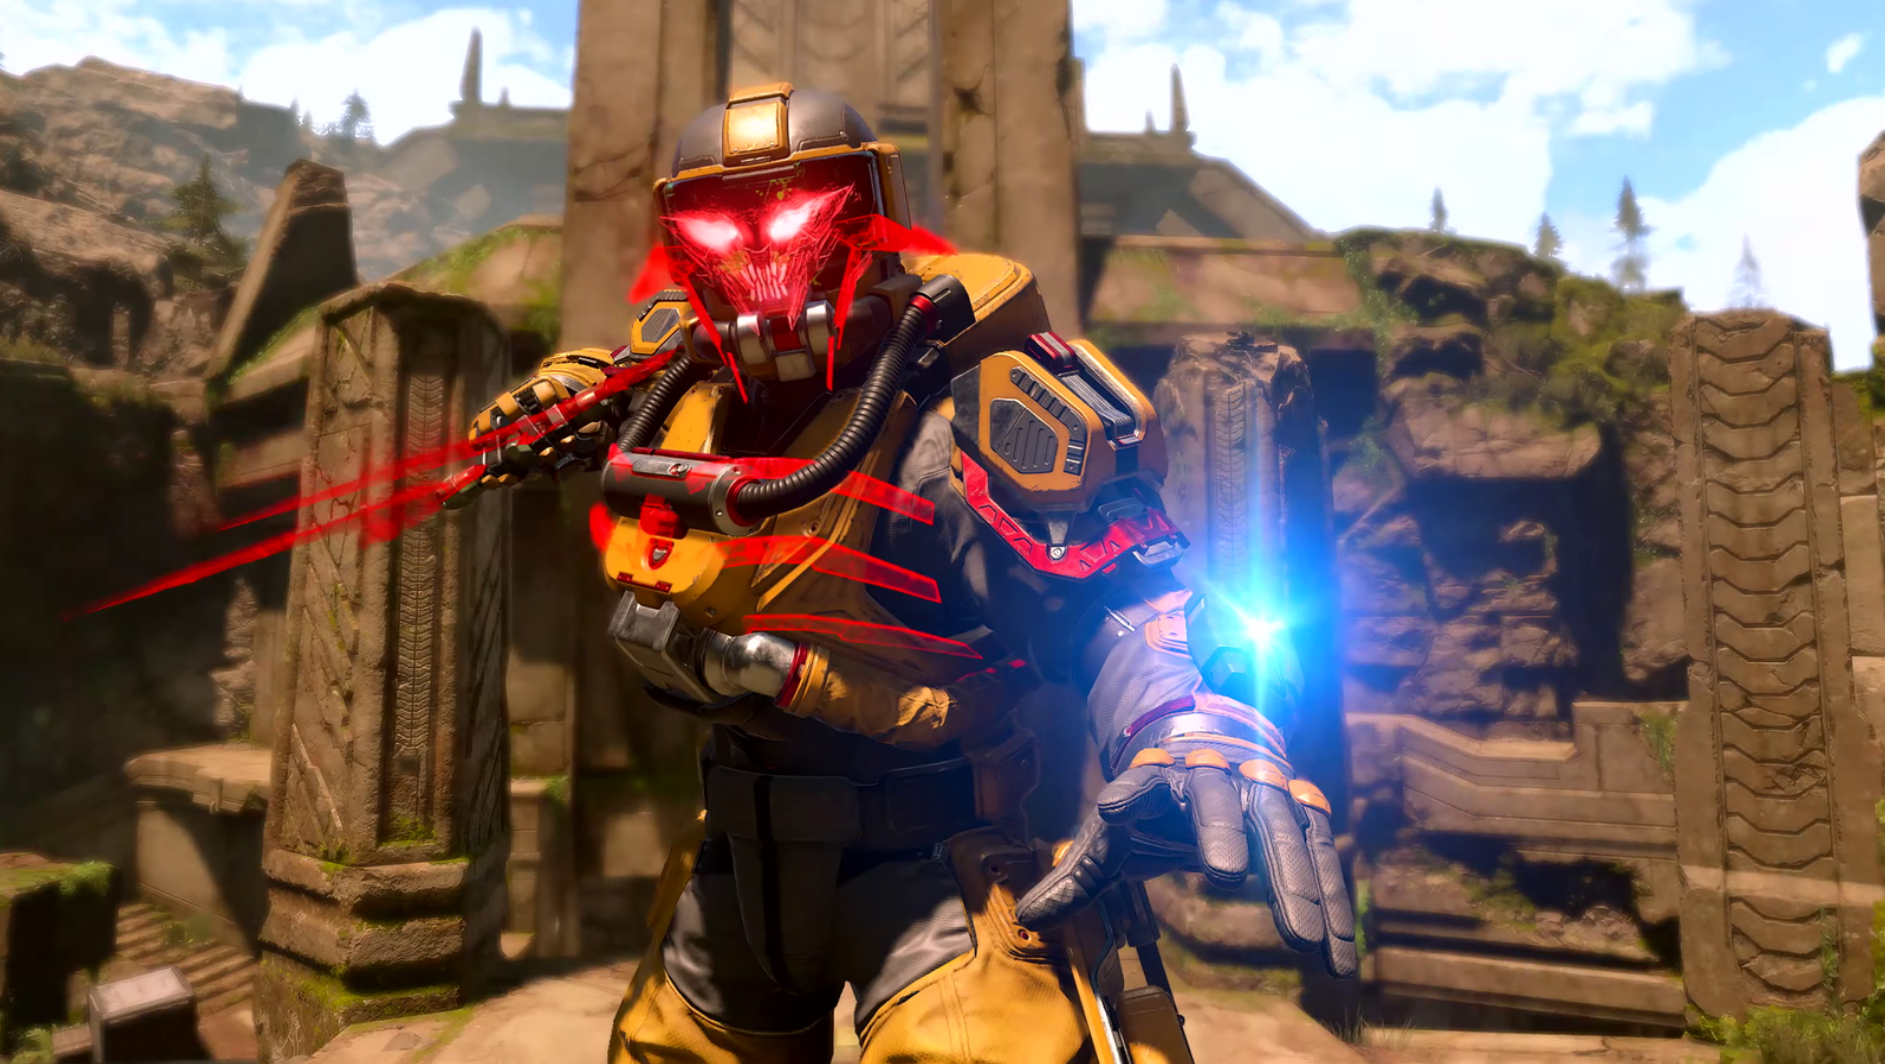 Hazmat wearing Spartan IV in Halo Infinite